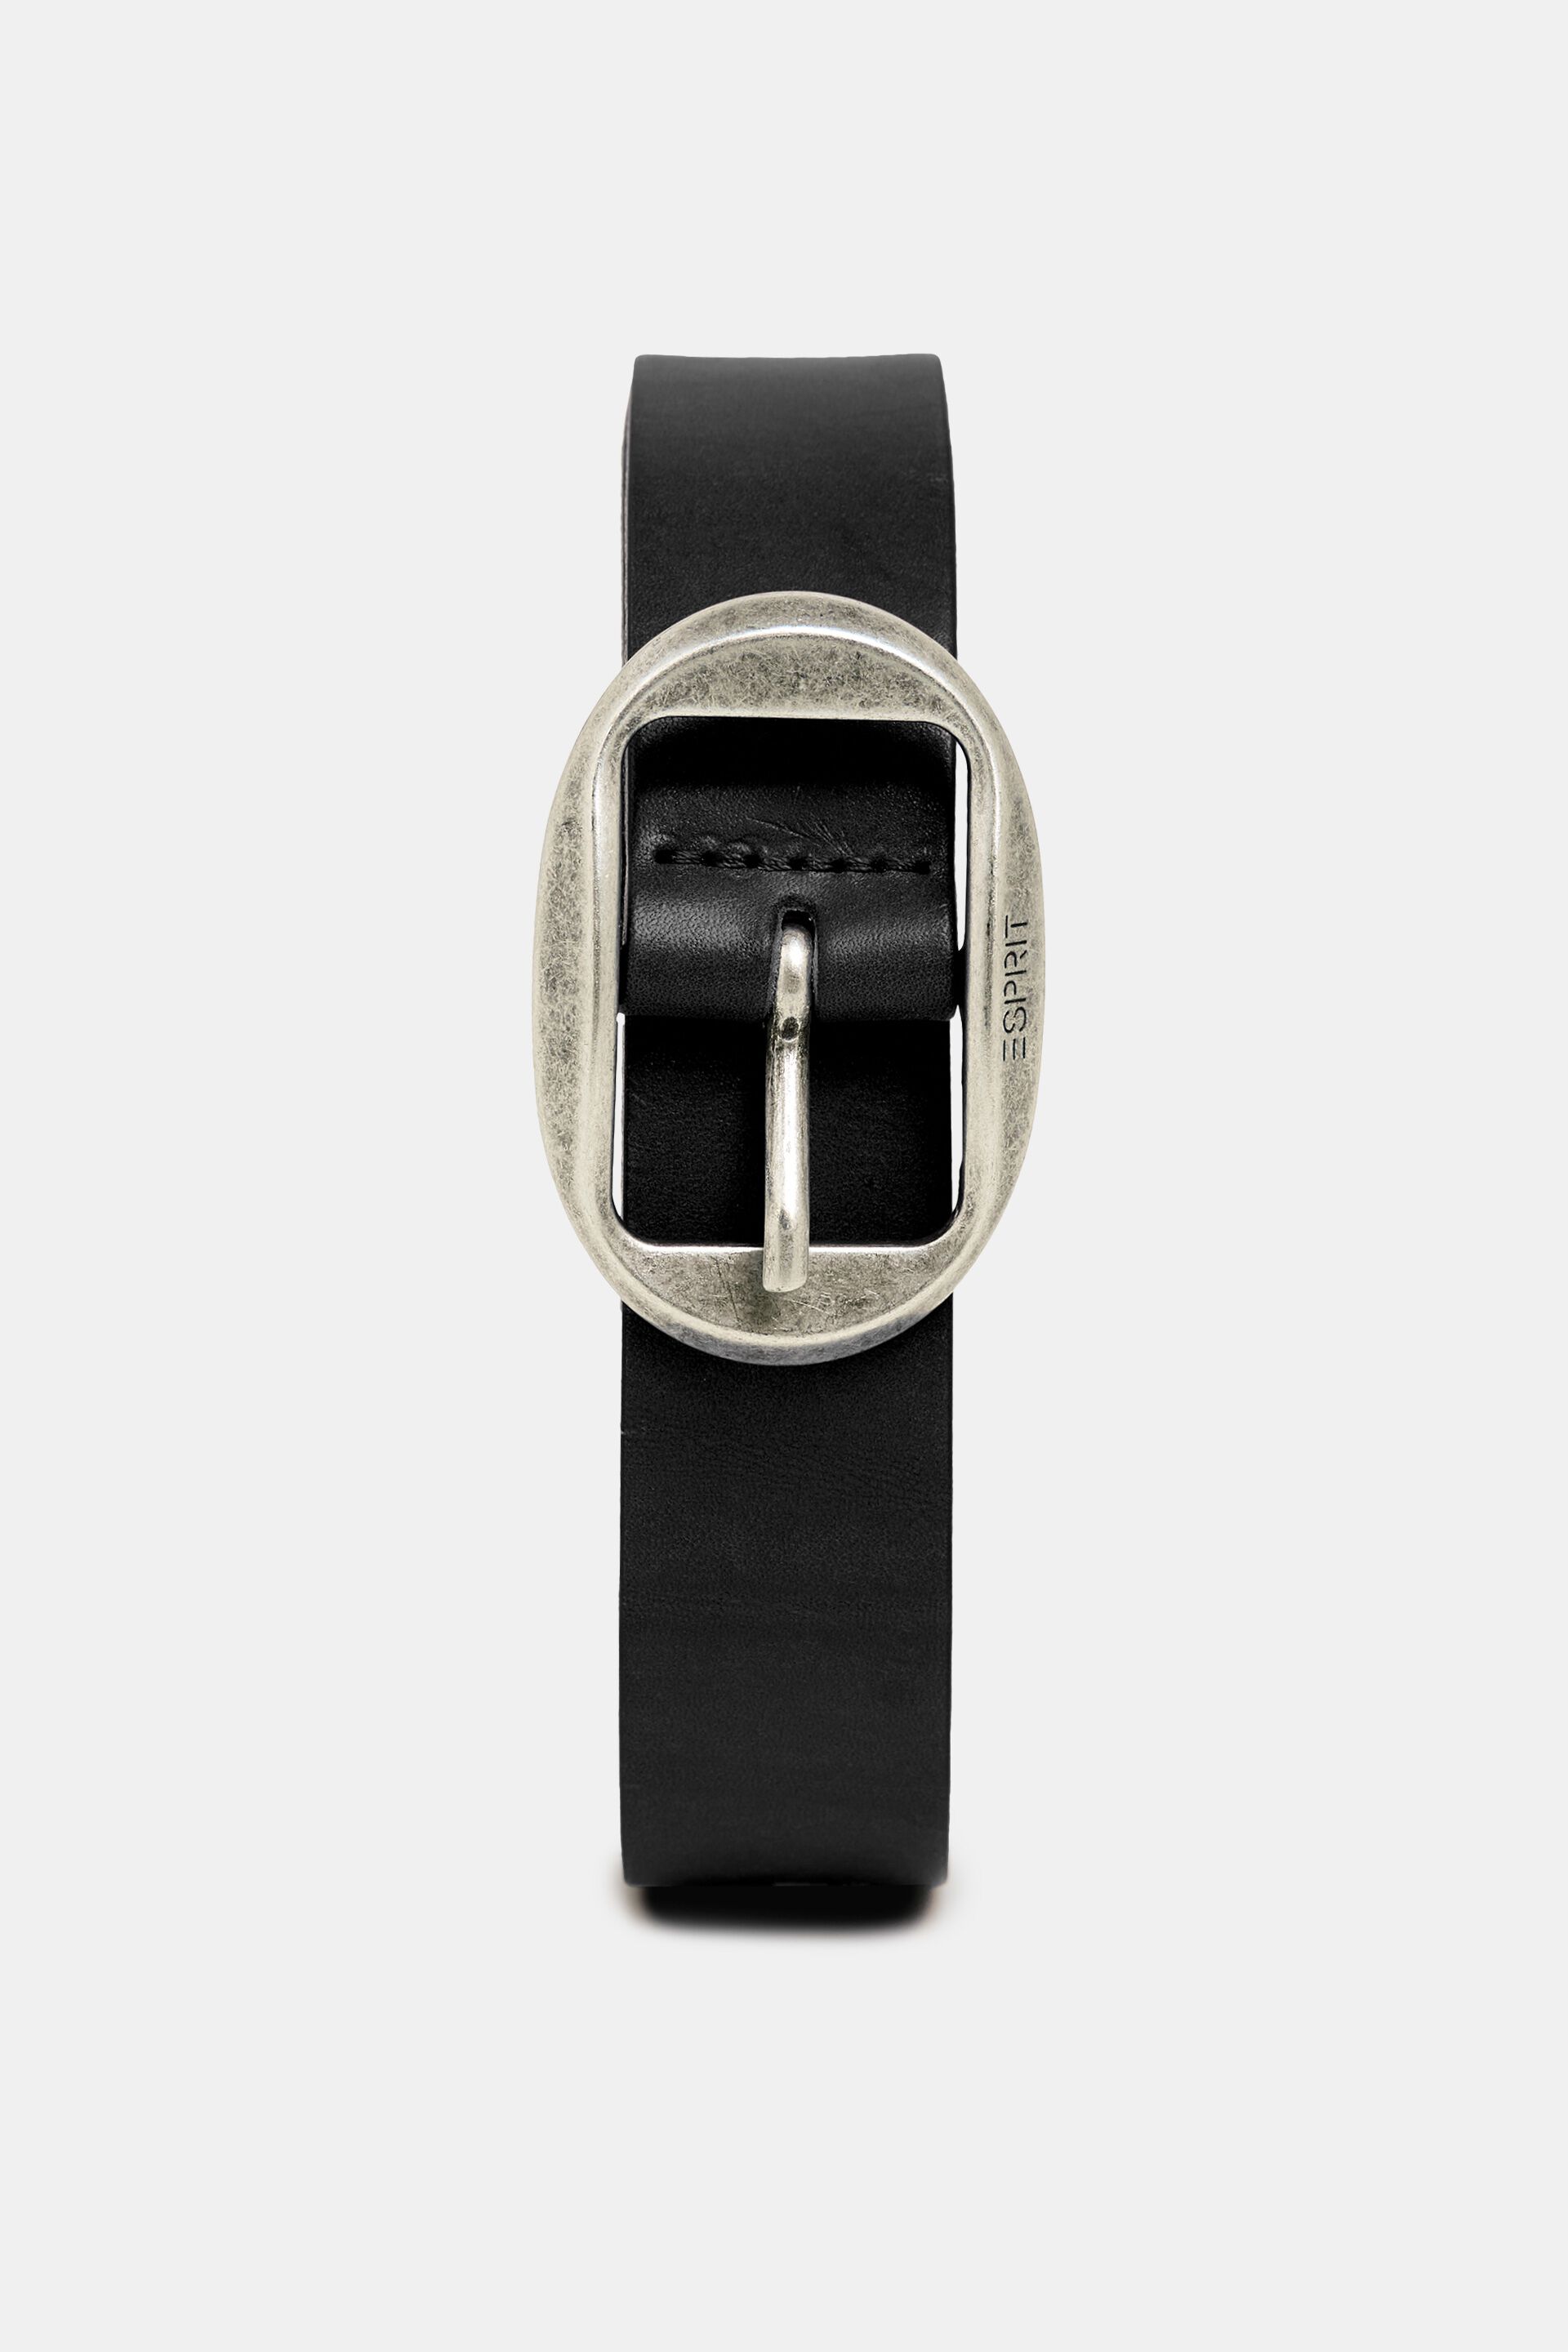 Esprit buckle a Leather with vintage belt